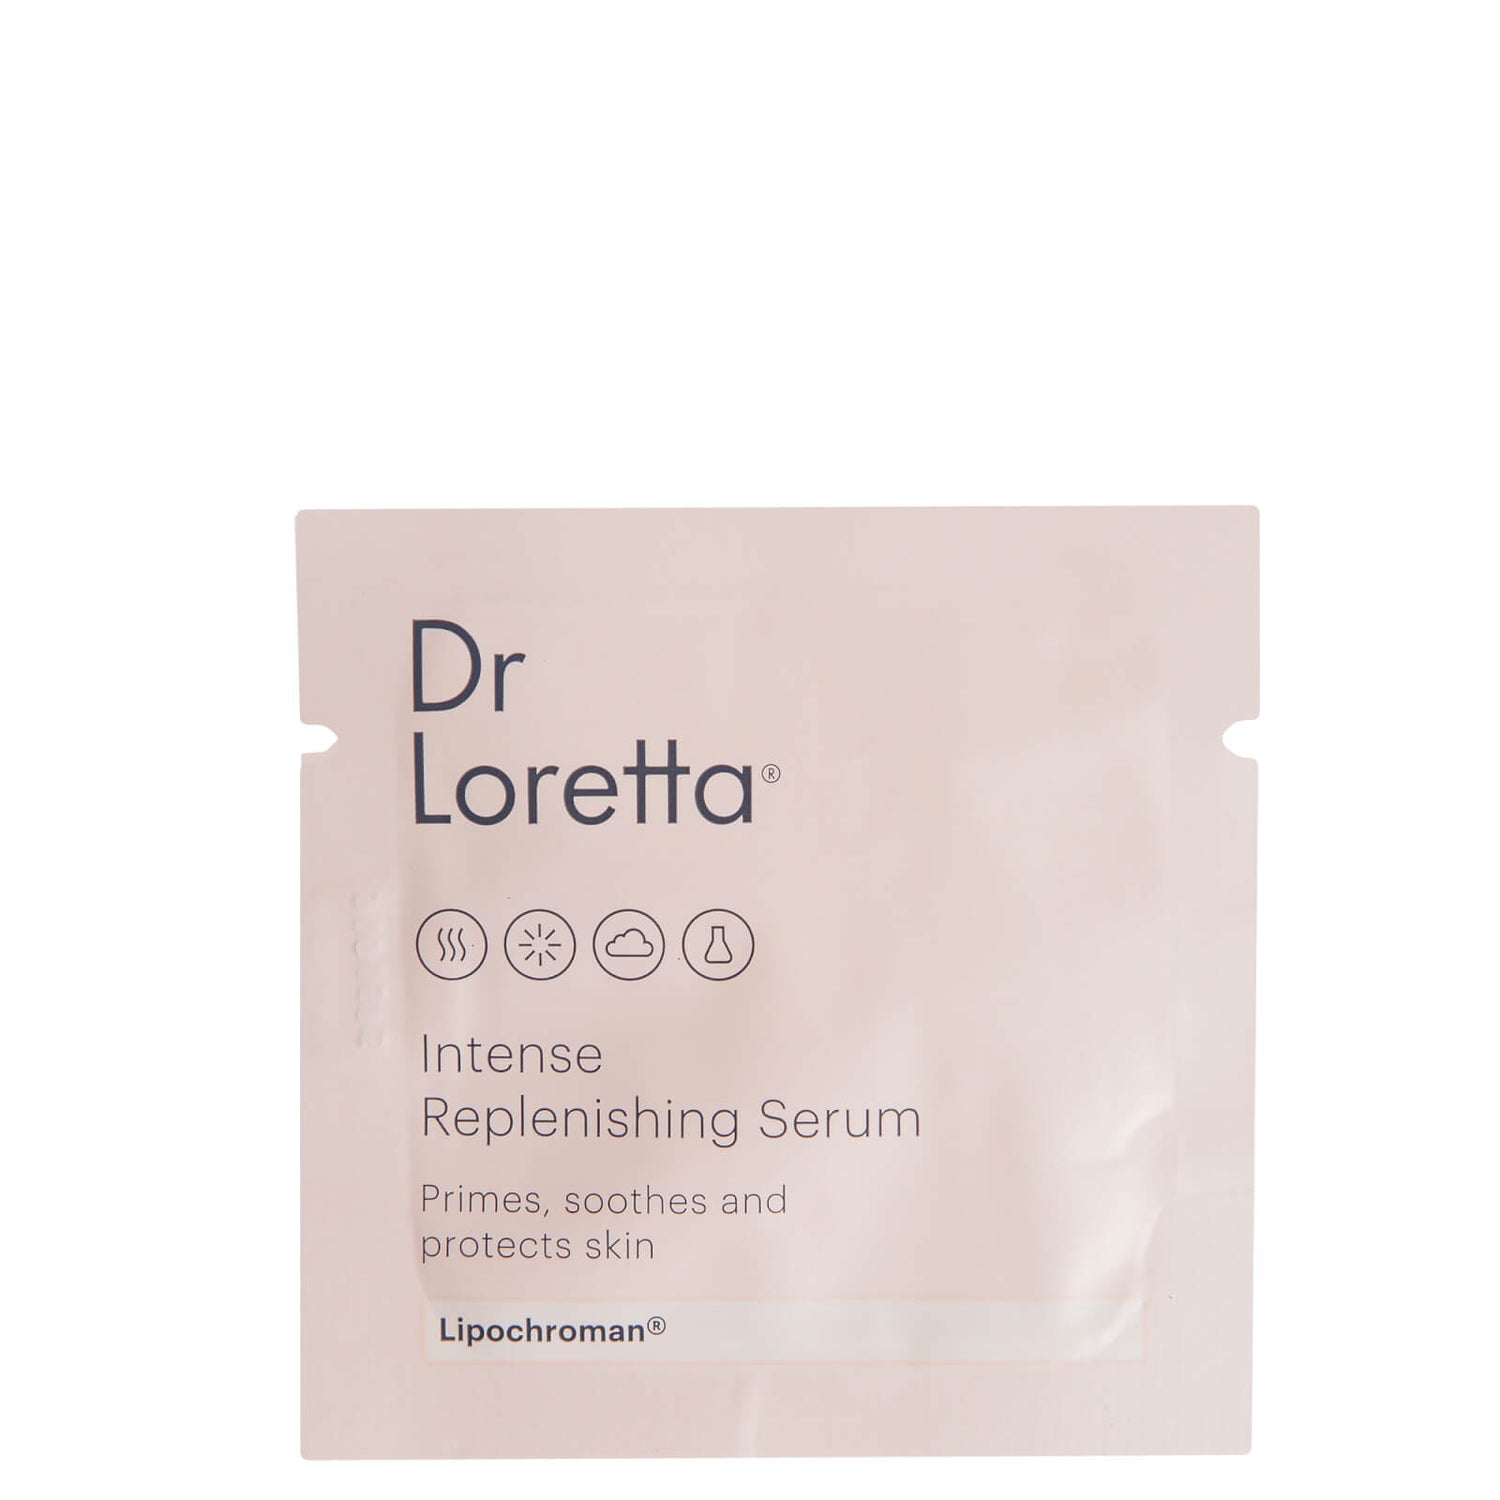 Dr. Loretta Intense Replenishing Serum Packette 1.5ml